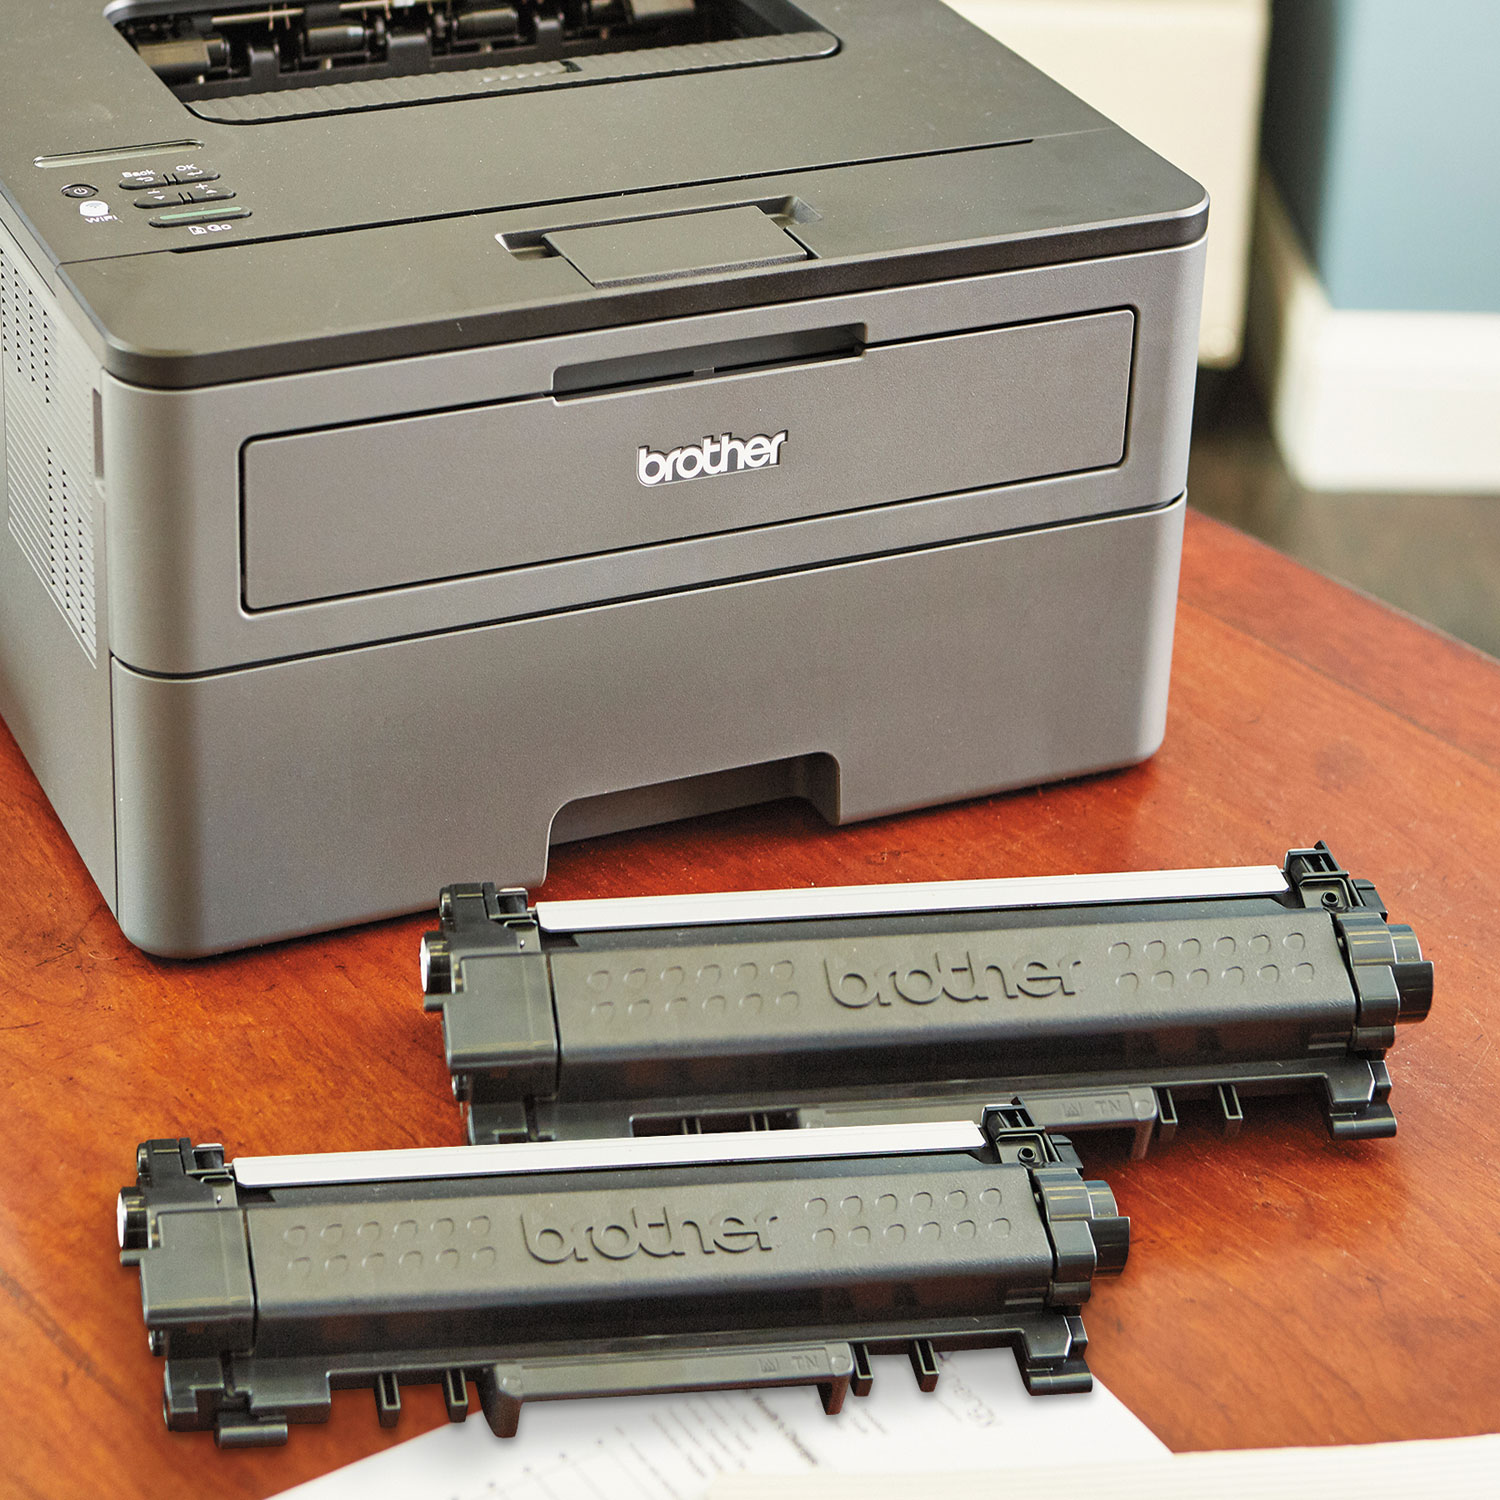  Brother Compact Monochrome Laser Printer, HL-L2370DWXL